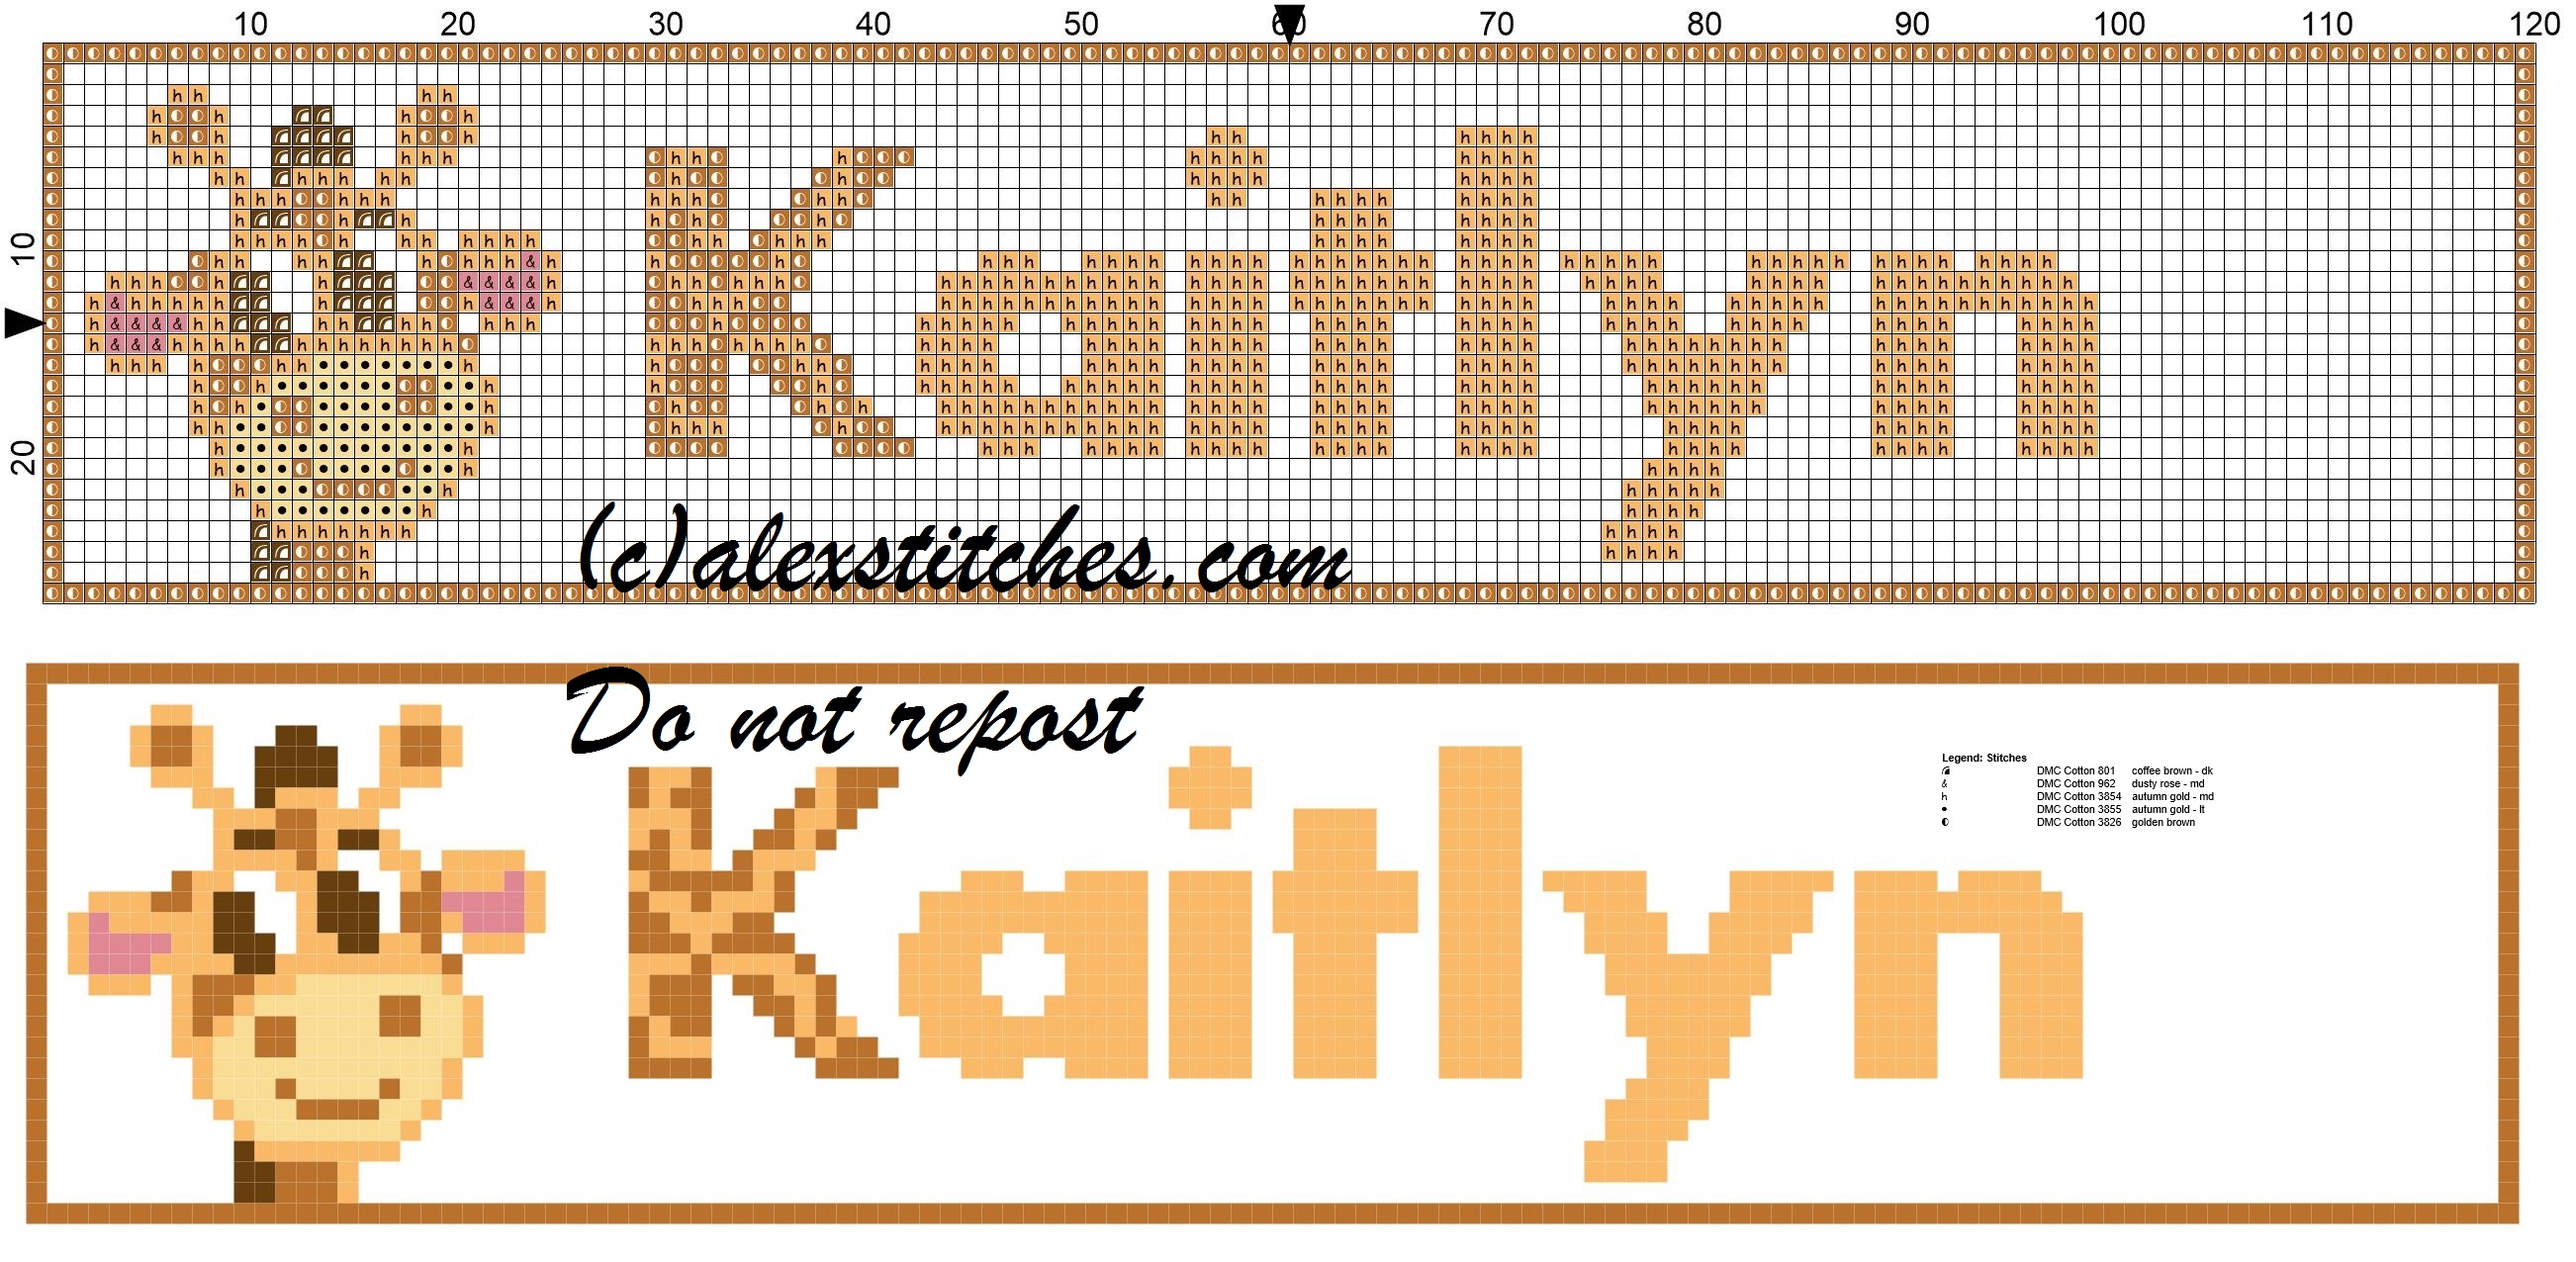 Kaitlyn name with giraffe cross stitch pattern